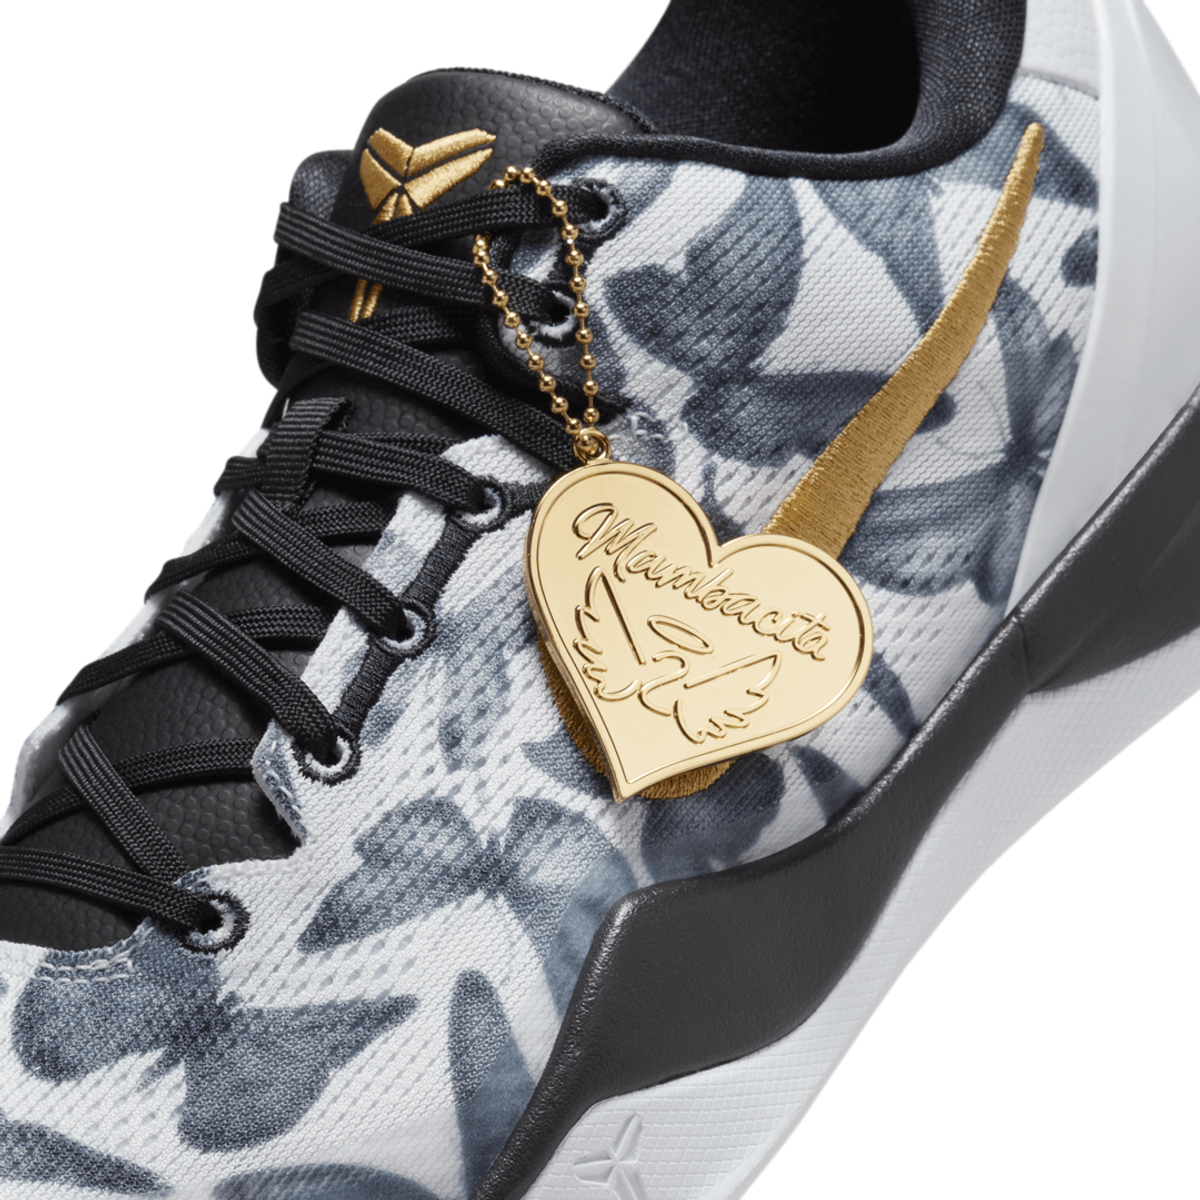 Official Look At The Nike Kobe 8 Protro "Mambacita"